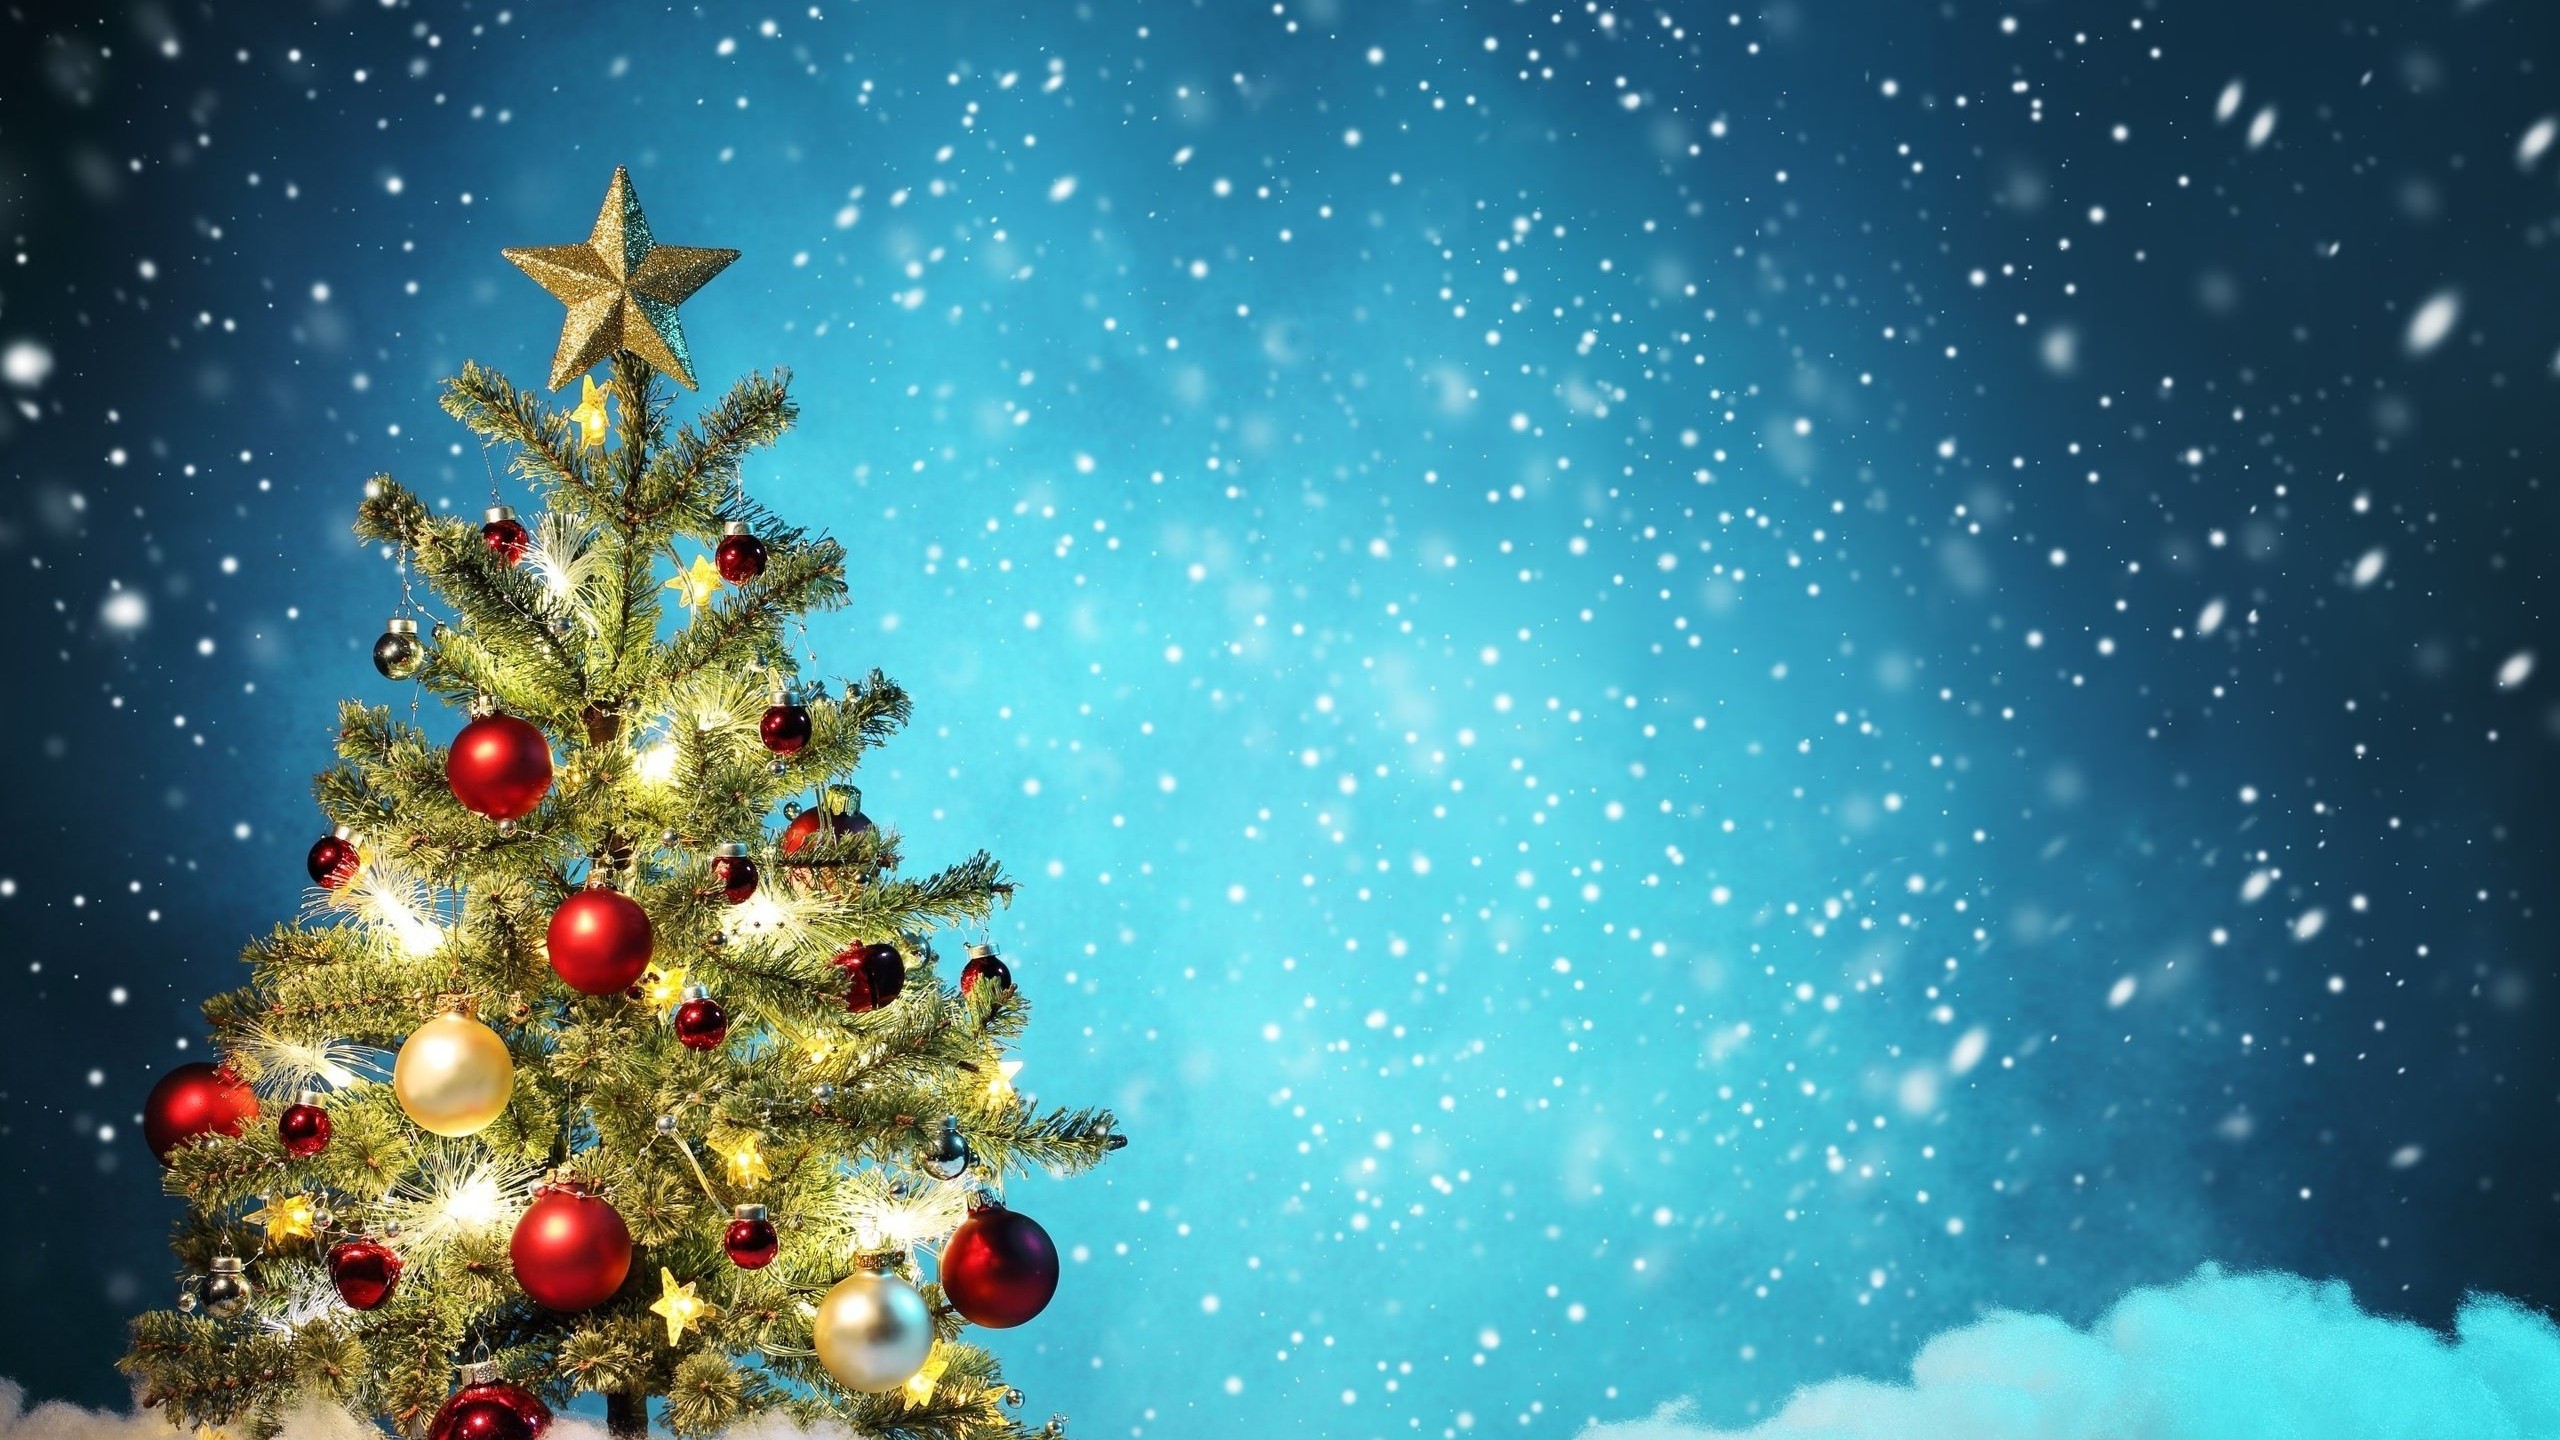 Beautiful Christmas Tree Wallpaper for Desktop 2560x1440